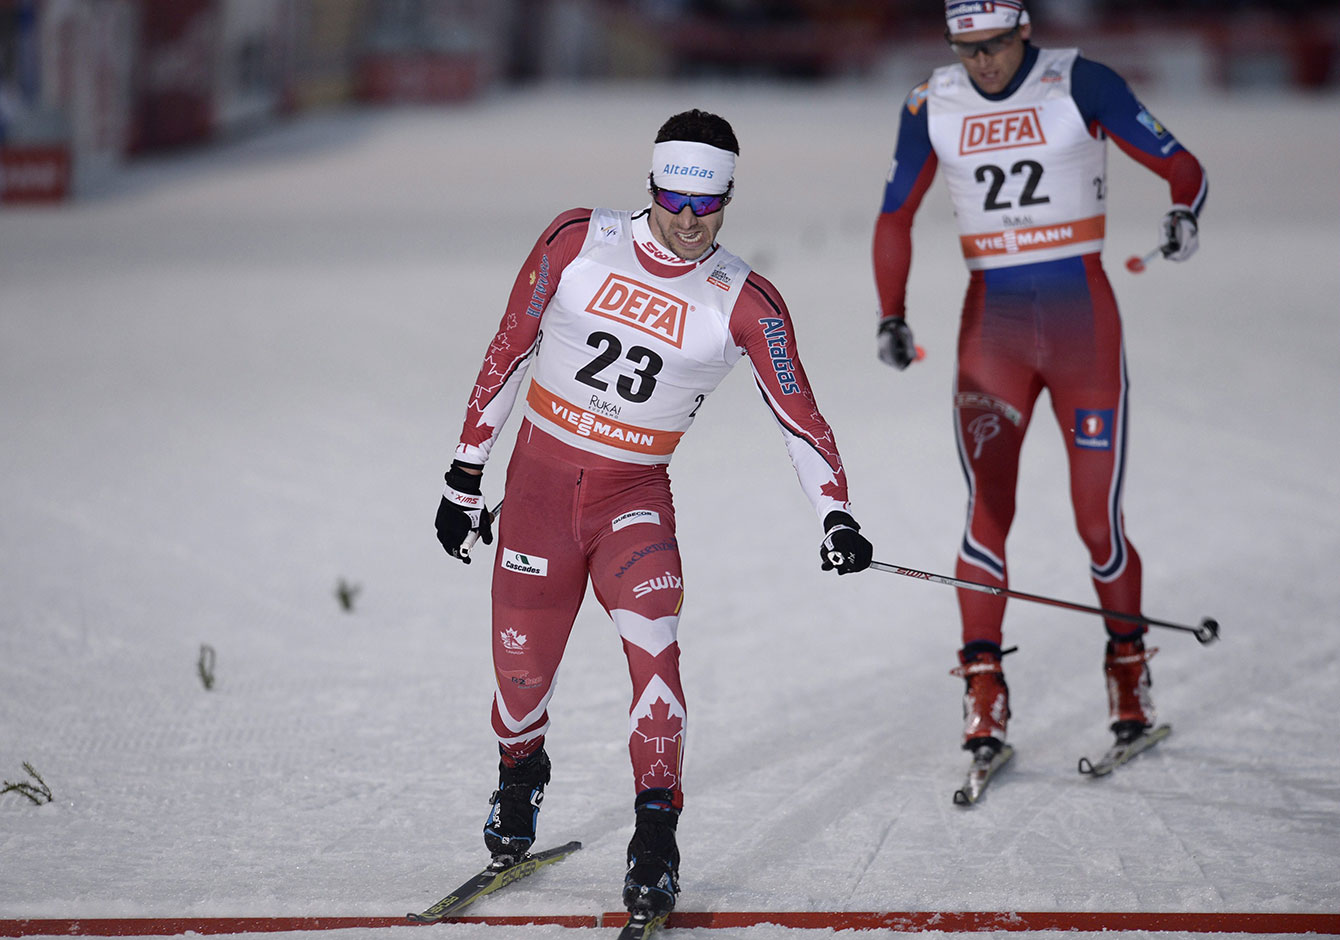 Alex Harvey edges Dario Cologna of Switzerland in Kuusamo, Finland to win FIS World Cup skate-ski silver on November 28, 2015. 